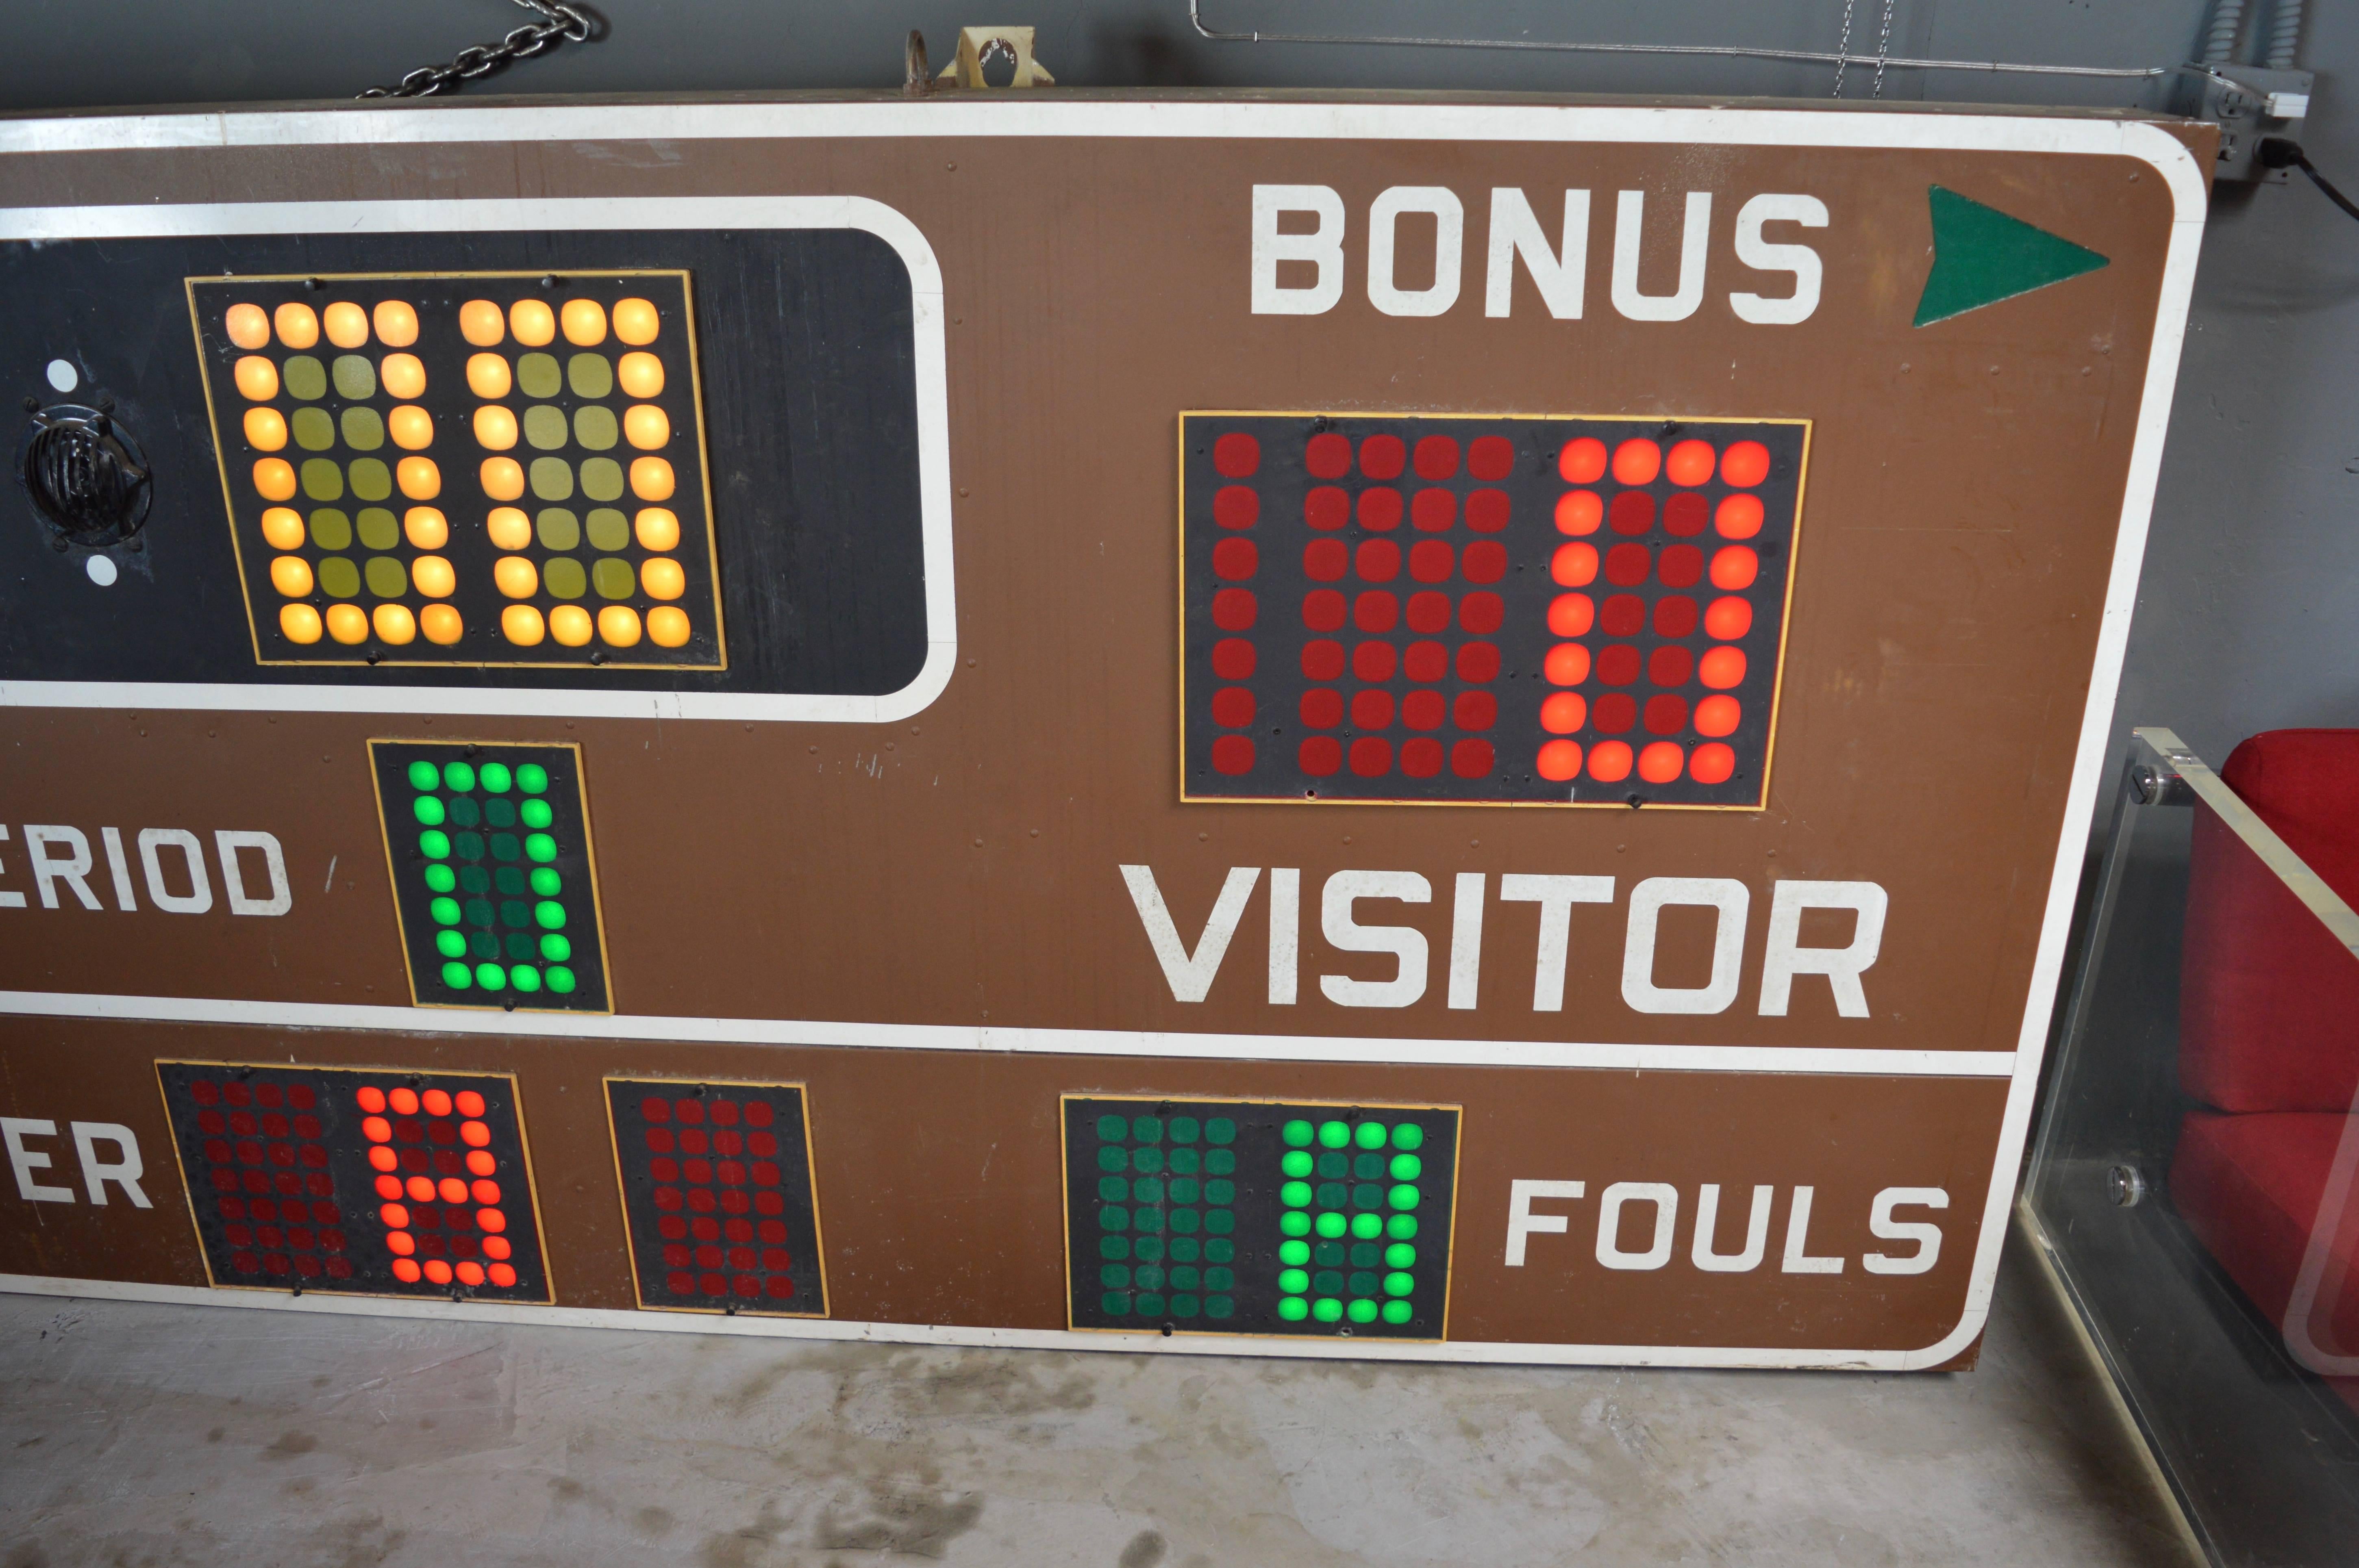 vintage fair play scoreboard